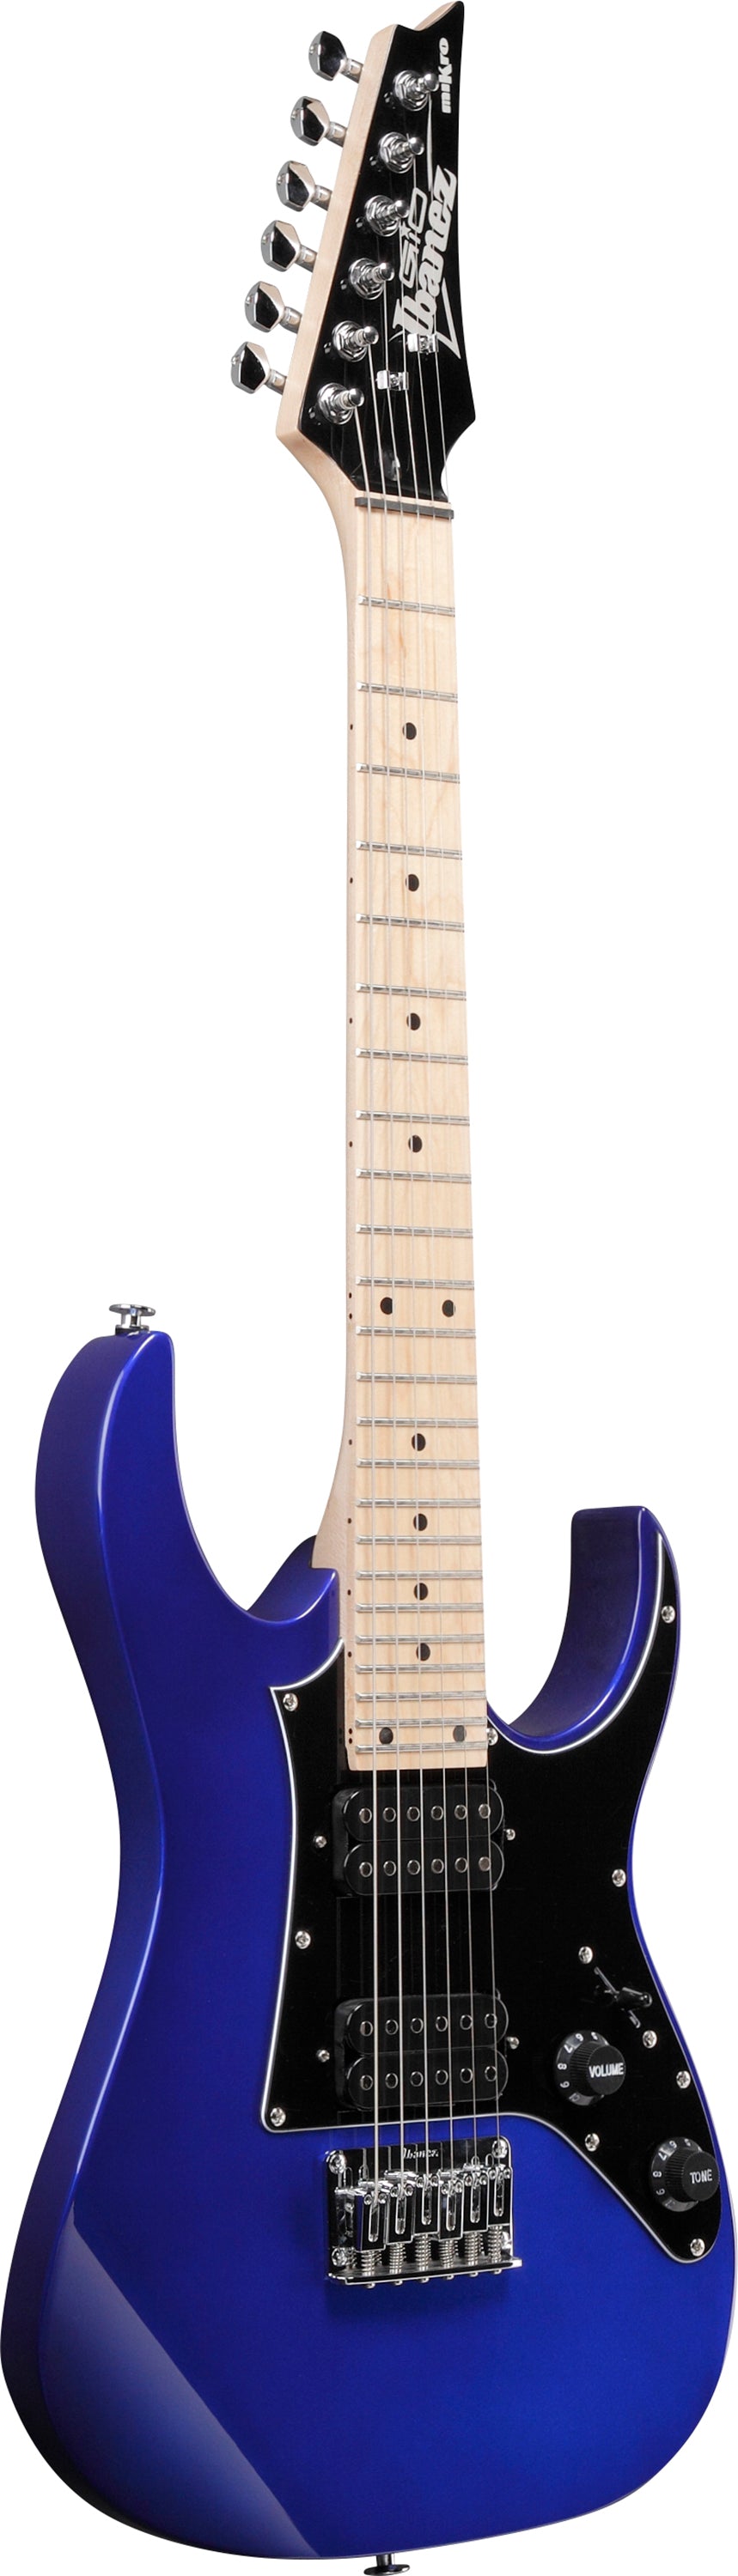 Ibanez GRGM21 Miko Electric Guitar (Jewel Blue)